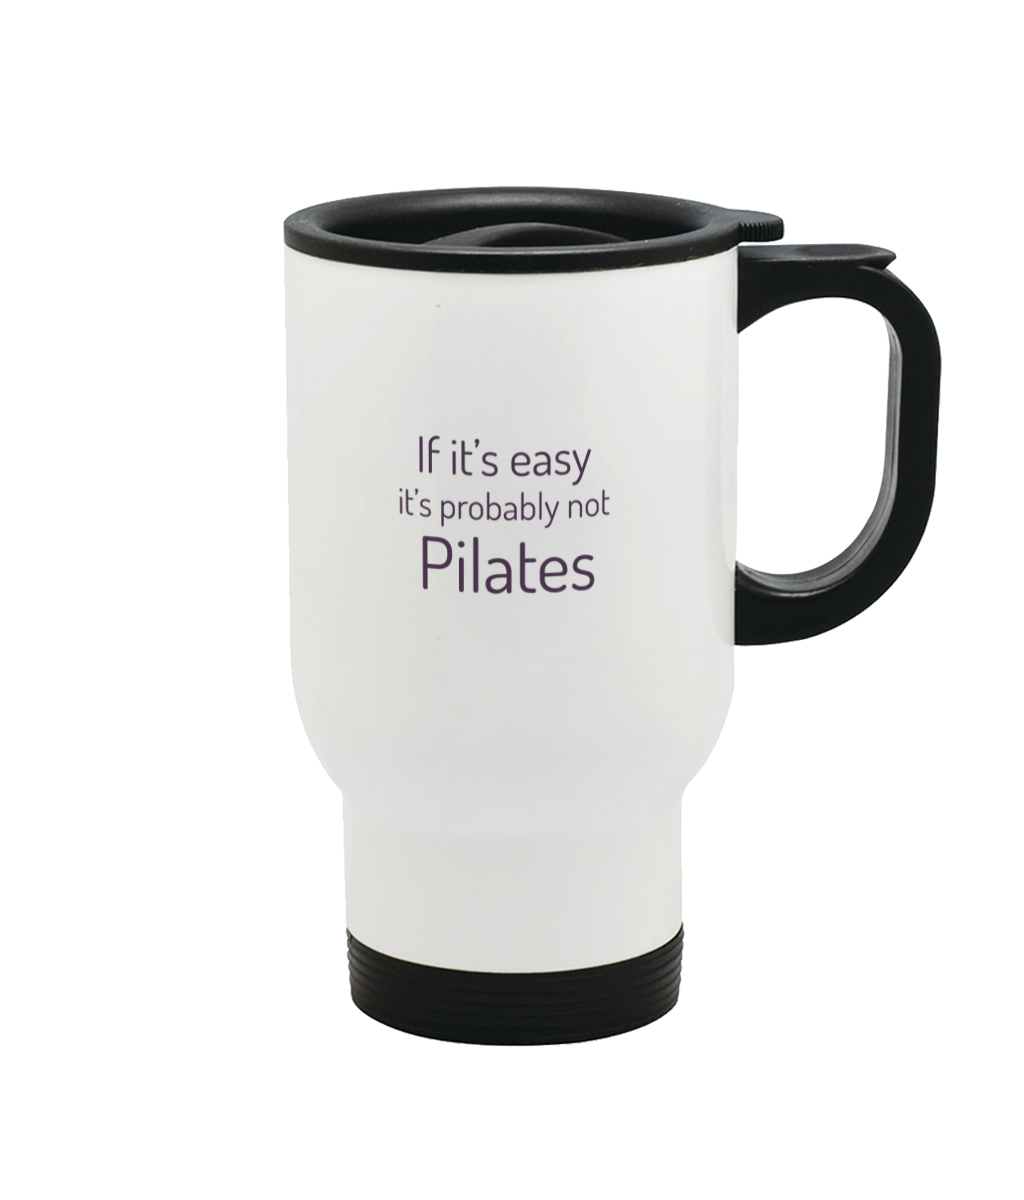 Pilates thermal travel mug